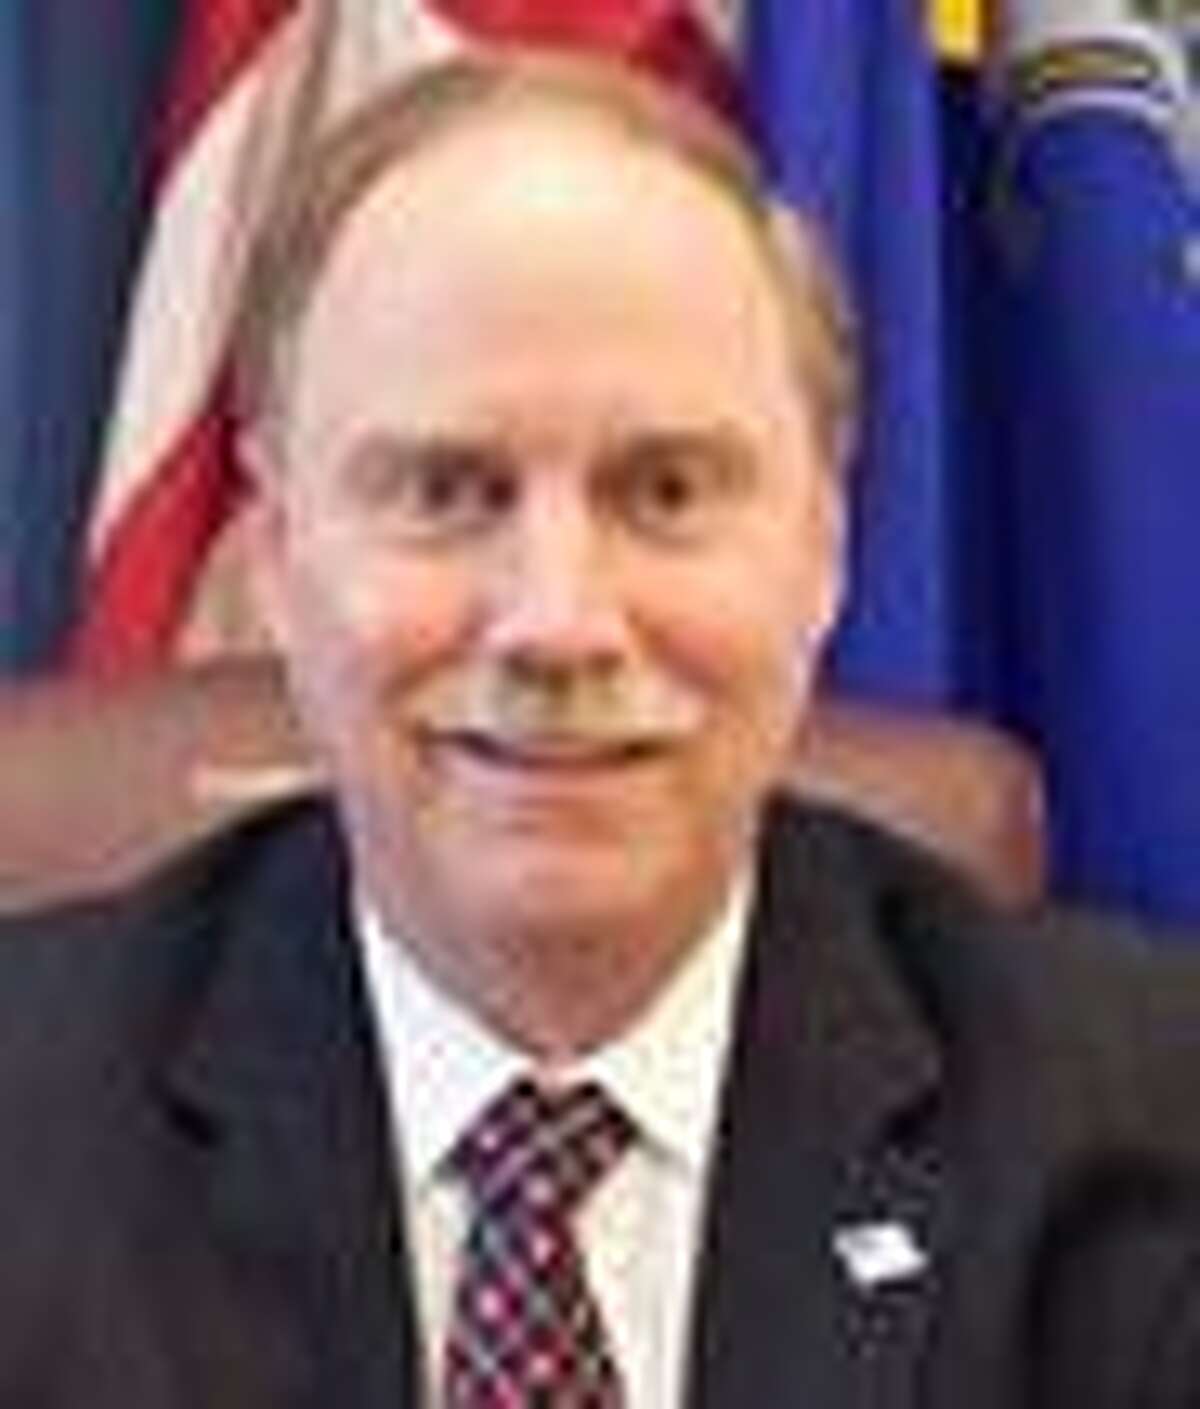 State Sen. Michael McLachlan